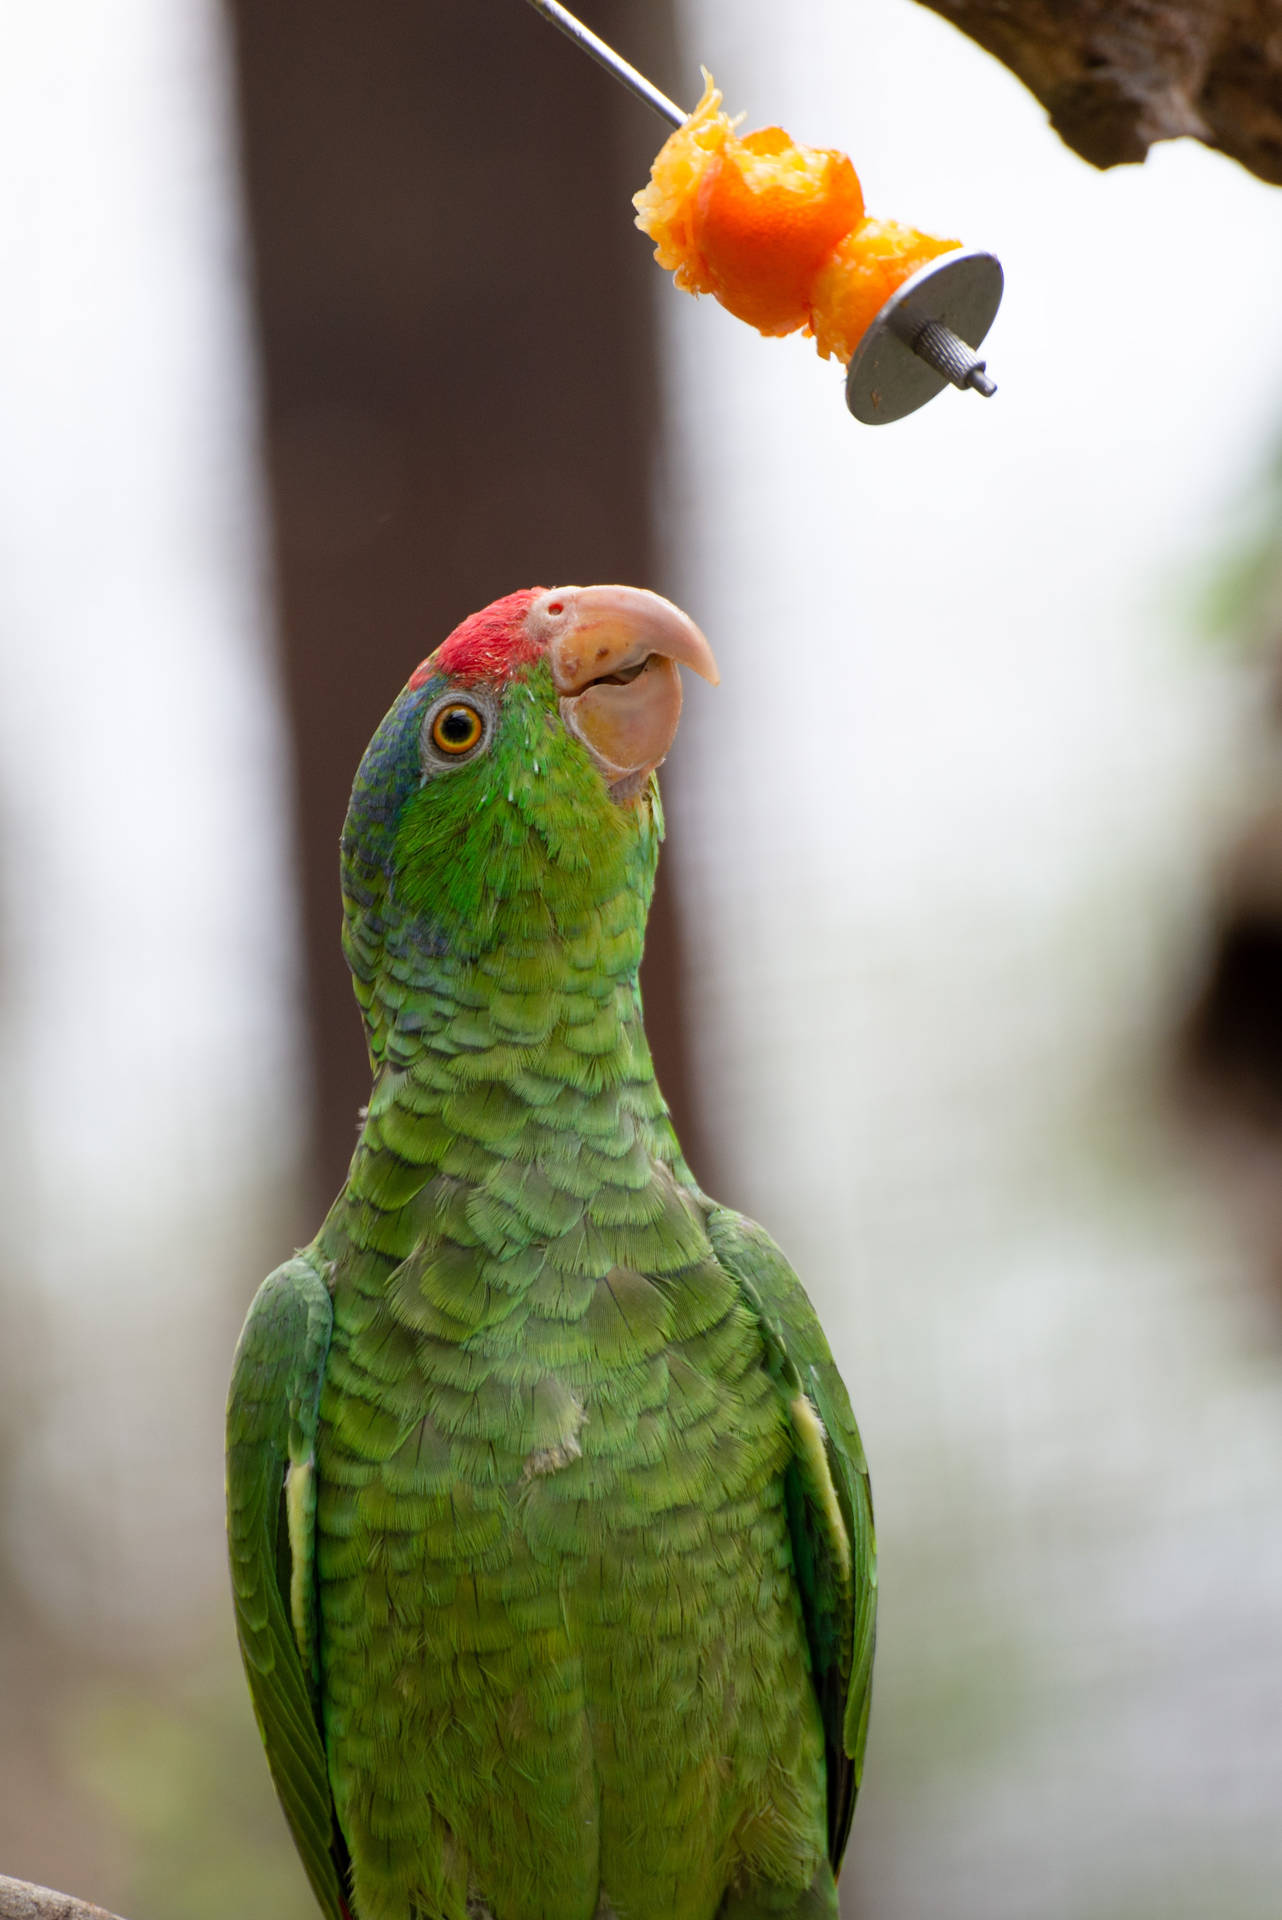 Fruit Feeding Green Parrot Hd Background